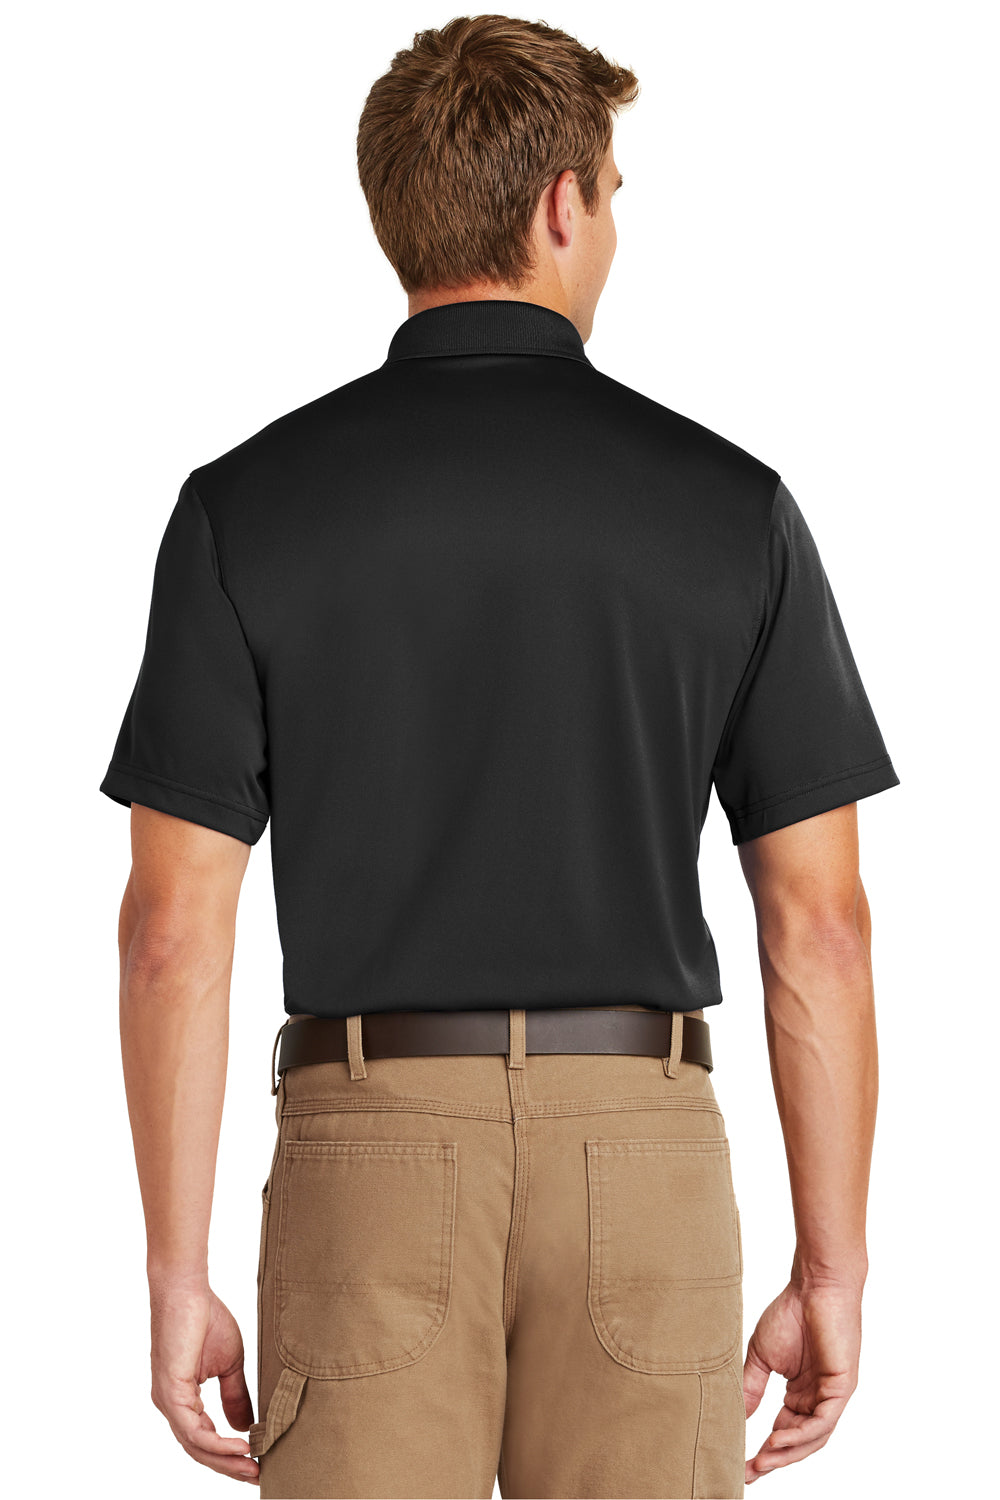 CornerStone CS412 Mens Select Moisture Wicking Short Sleeve Polo Shirt Black Back